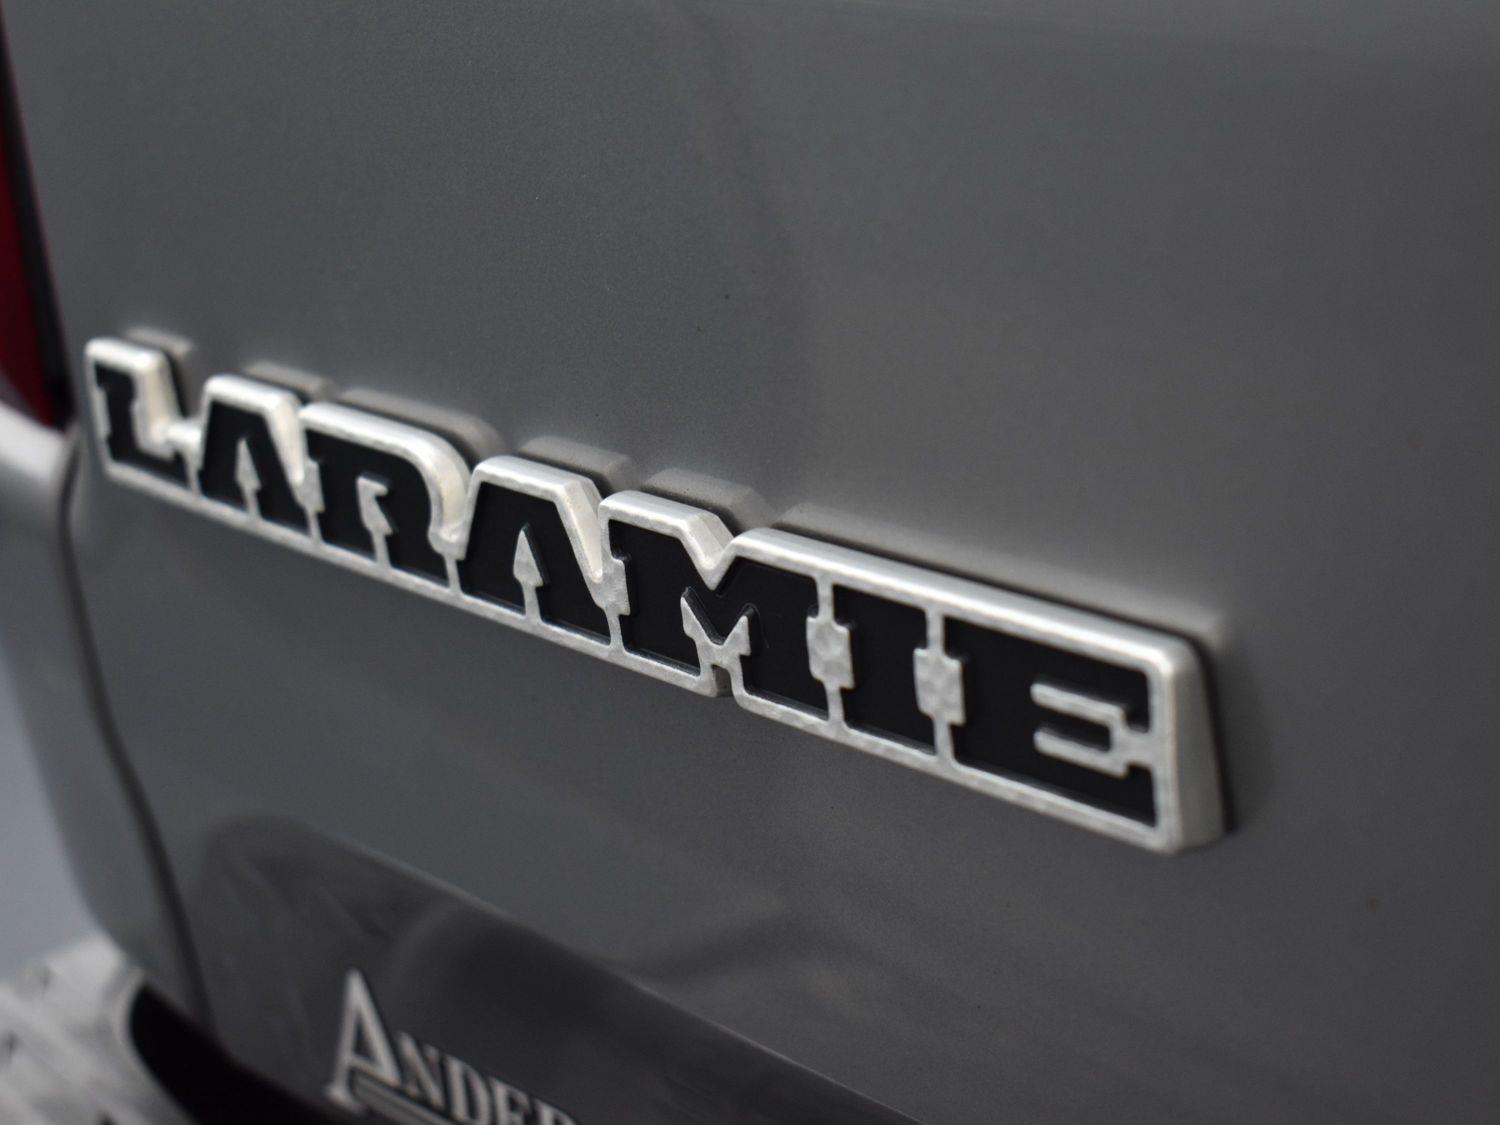 Used 2019 Ram 1500 Laramie Crew Cab Truck for sale in Grand Island NE